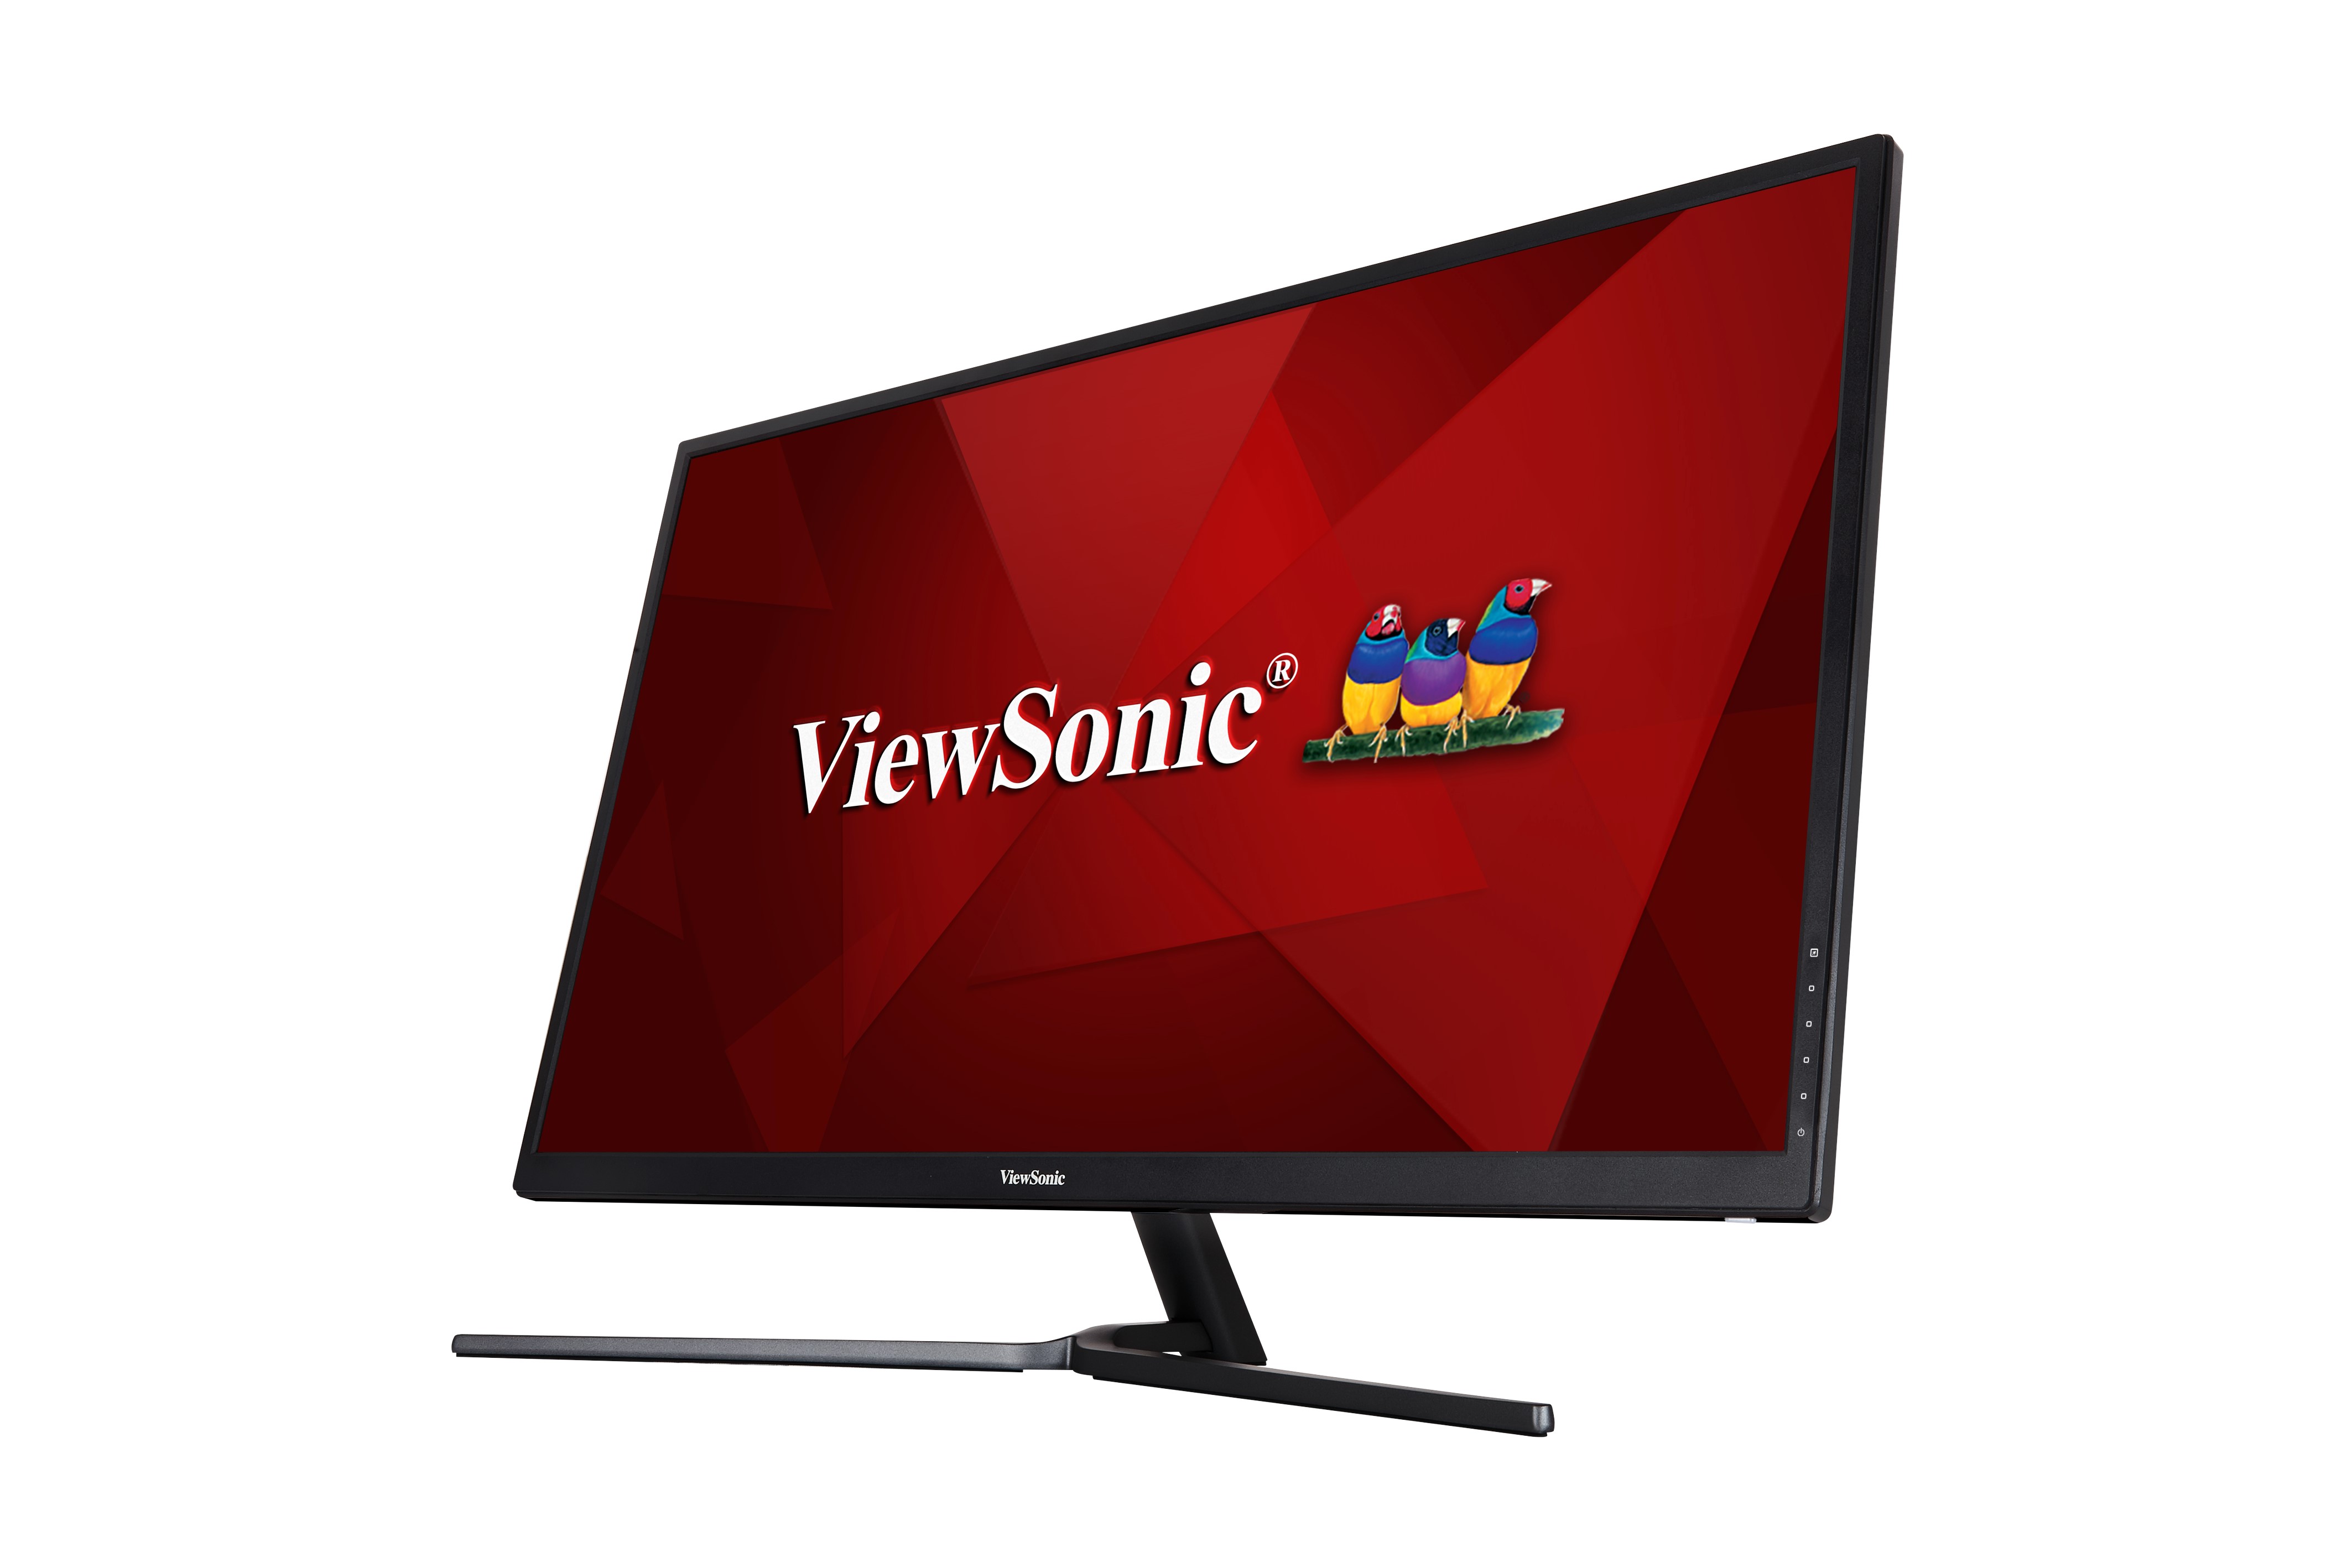 ViewSonic VX3211-4K-mhd 32 inch 4K Entertainment Monitor